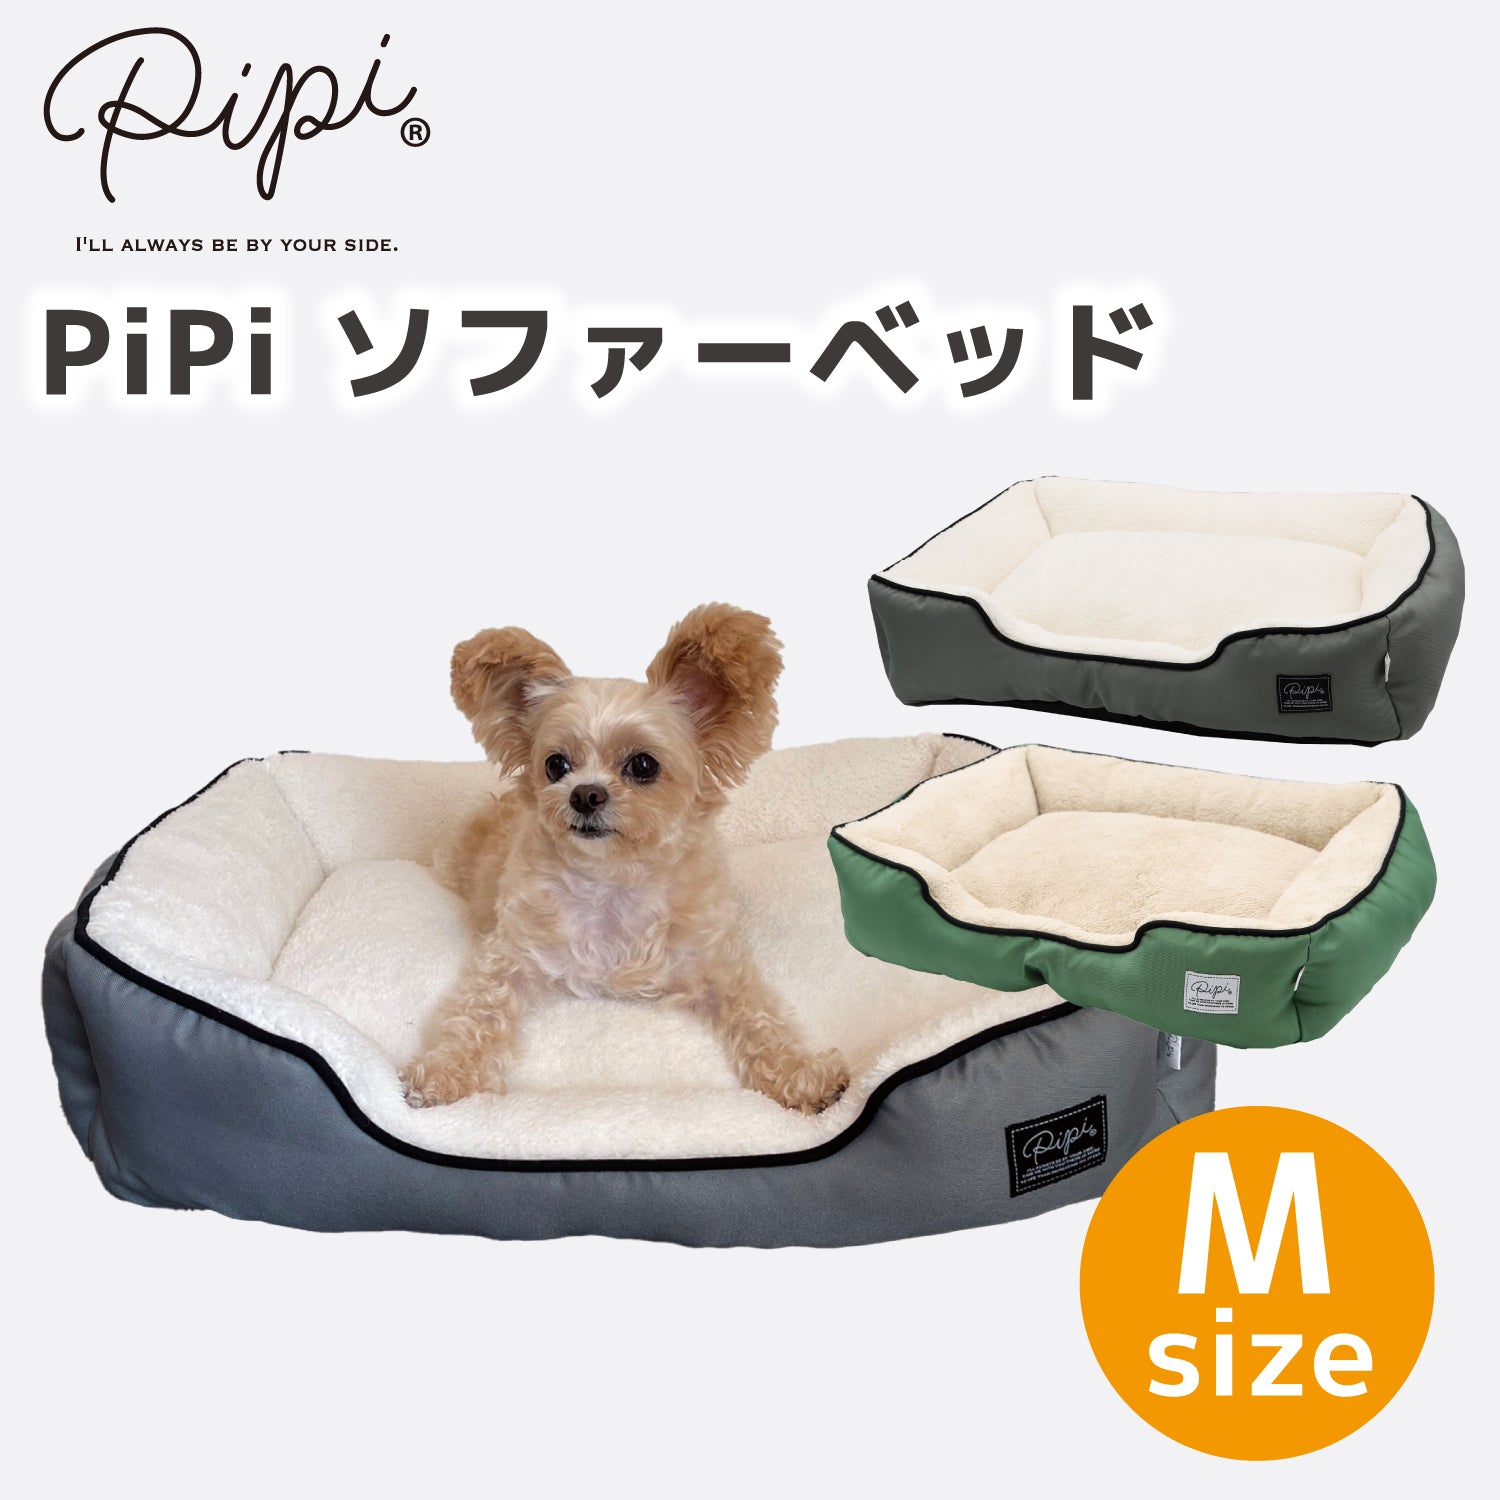 pipiちゃん専用☆4点pipiちゃん専用 - dsgenergy.pk